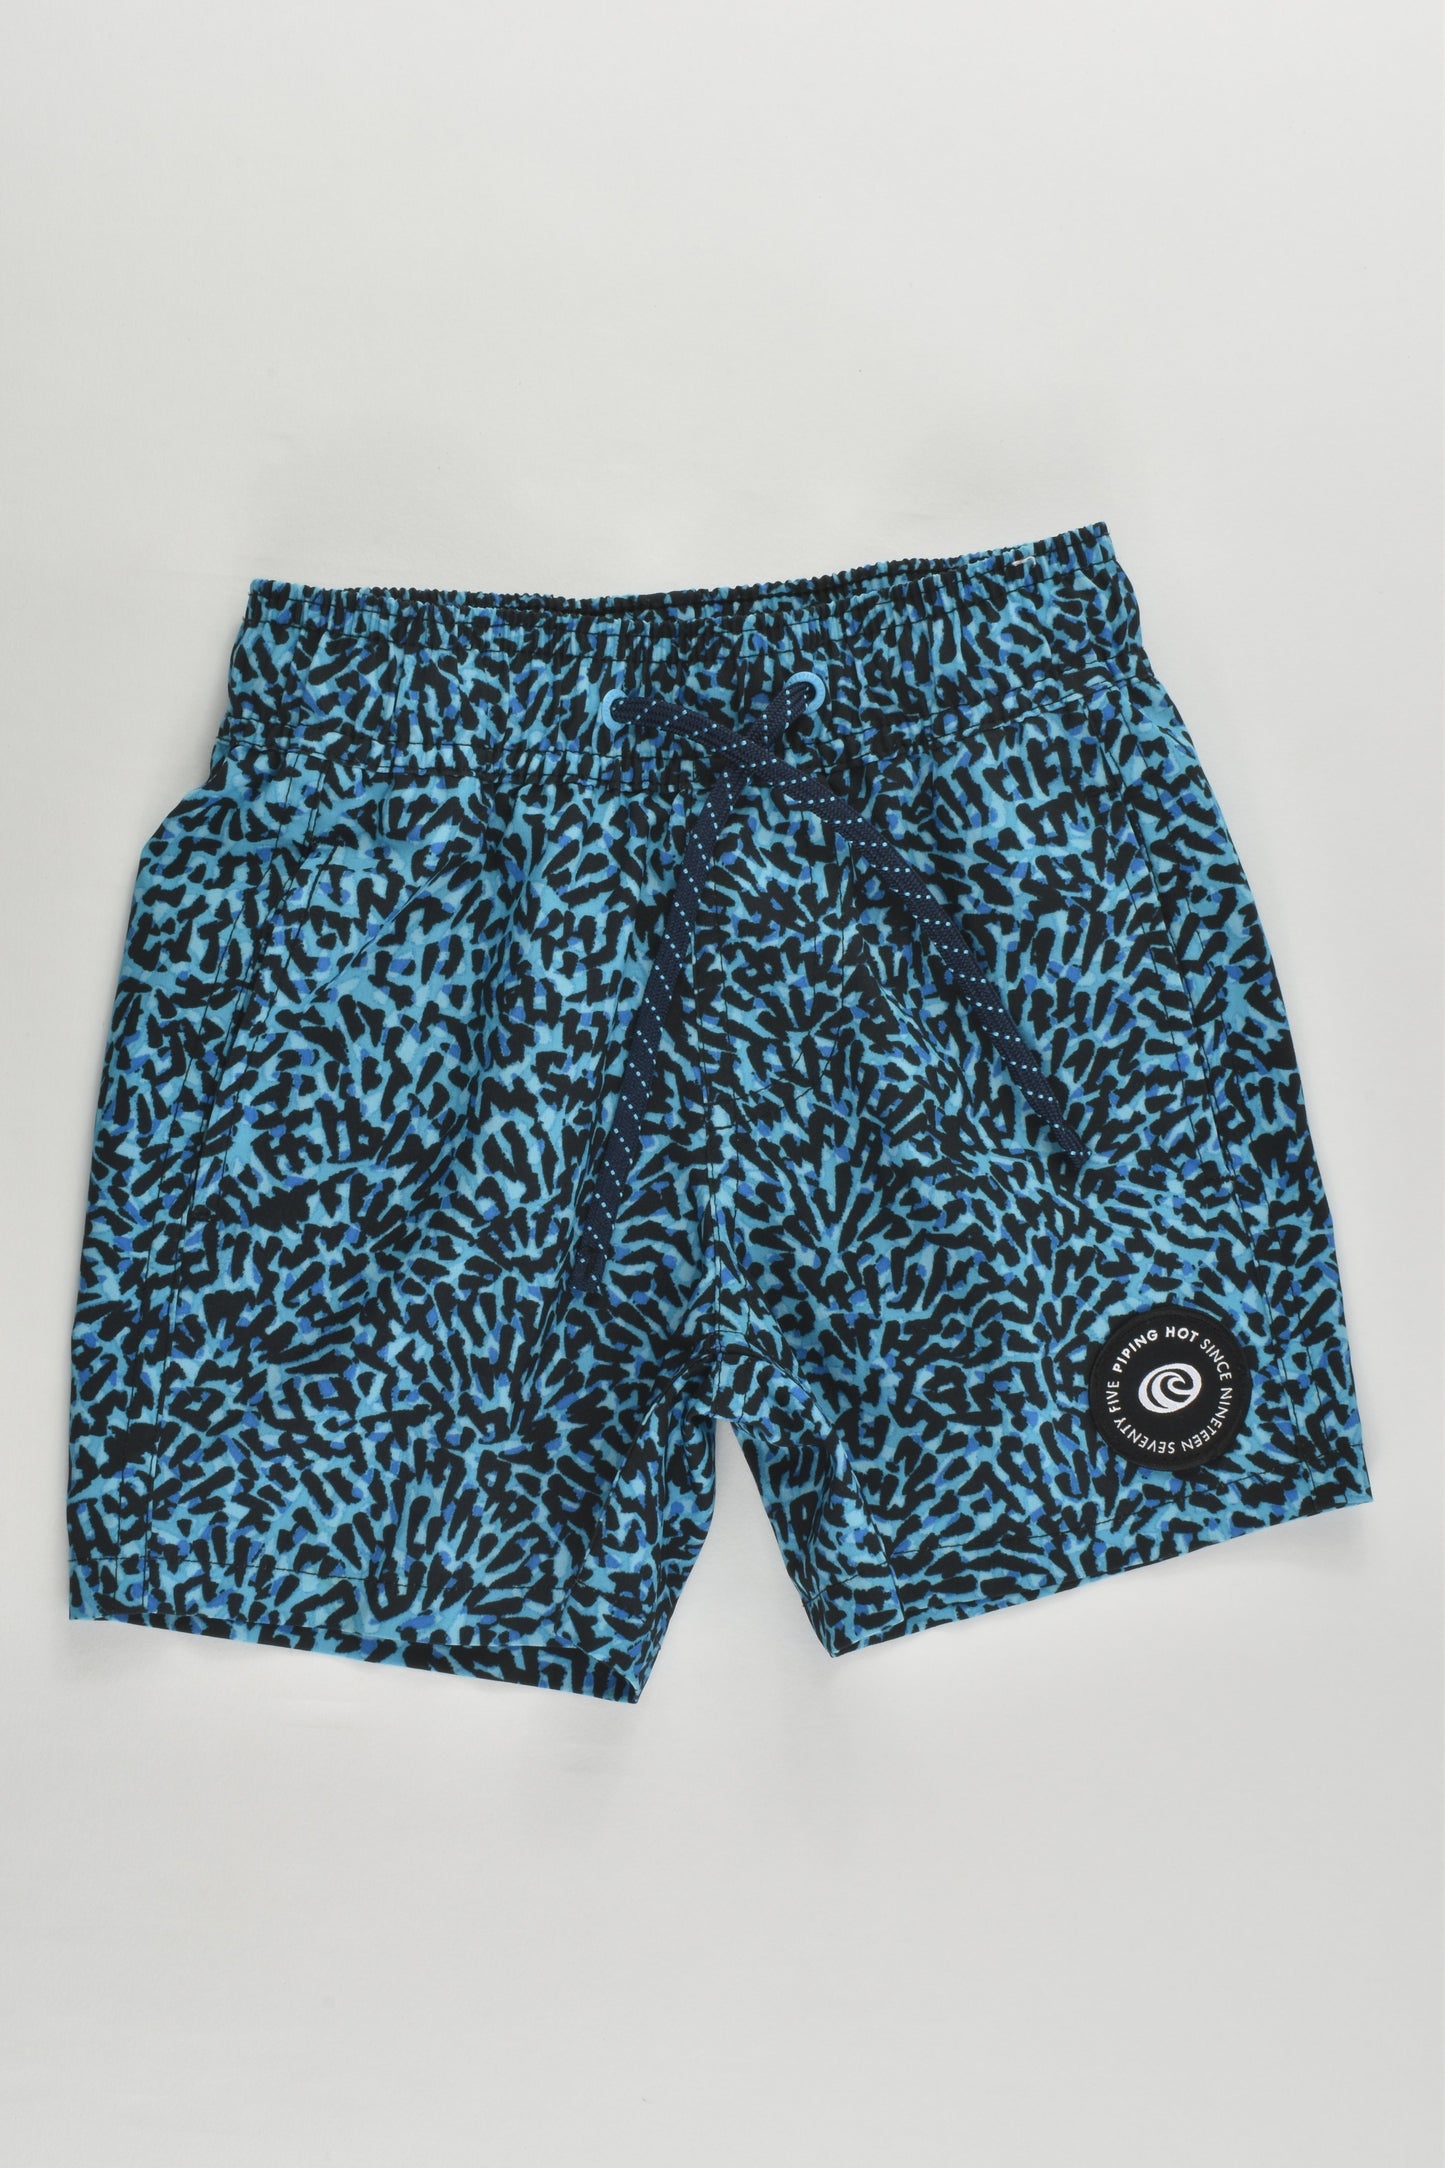 Piping Hot size 3 Leopard Board Shorts